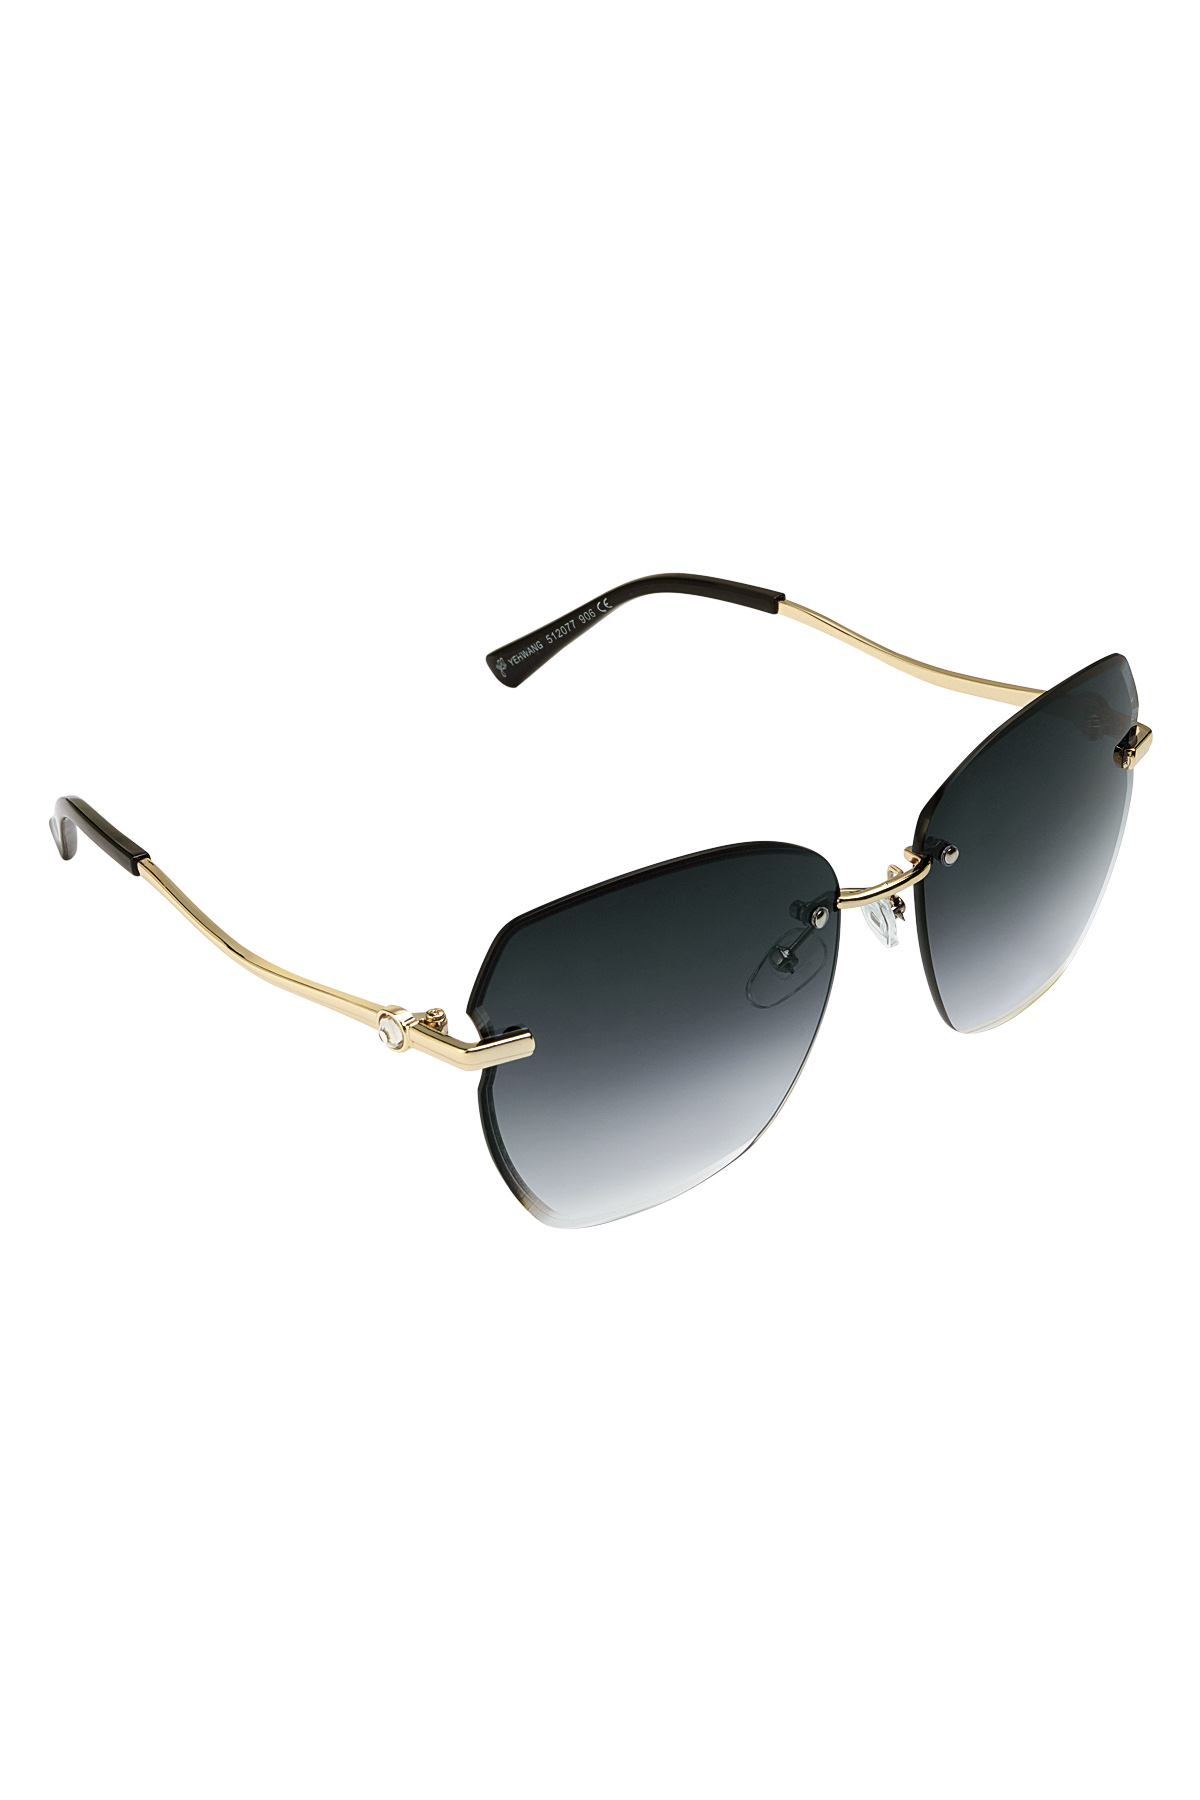 Statement sunglasses gold hardware - gray